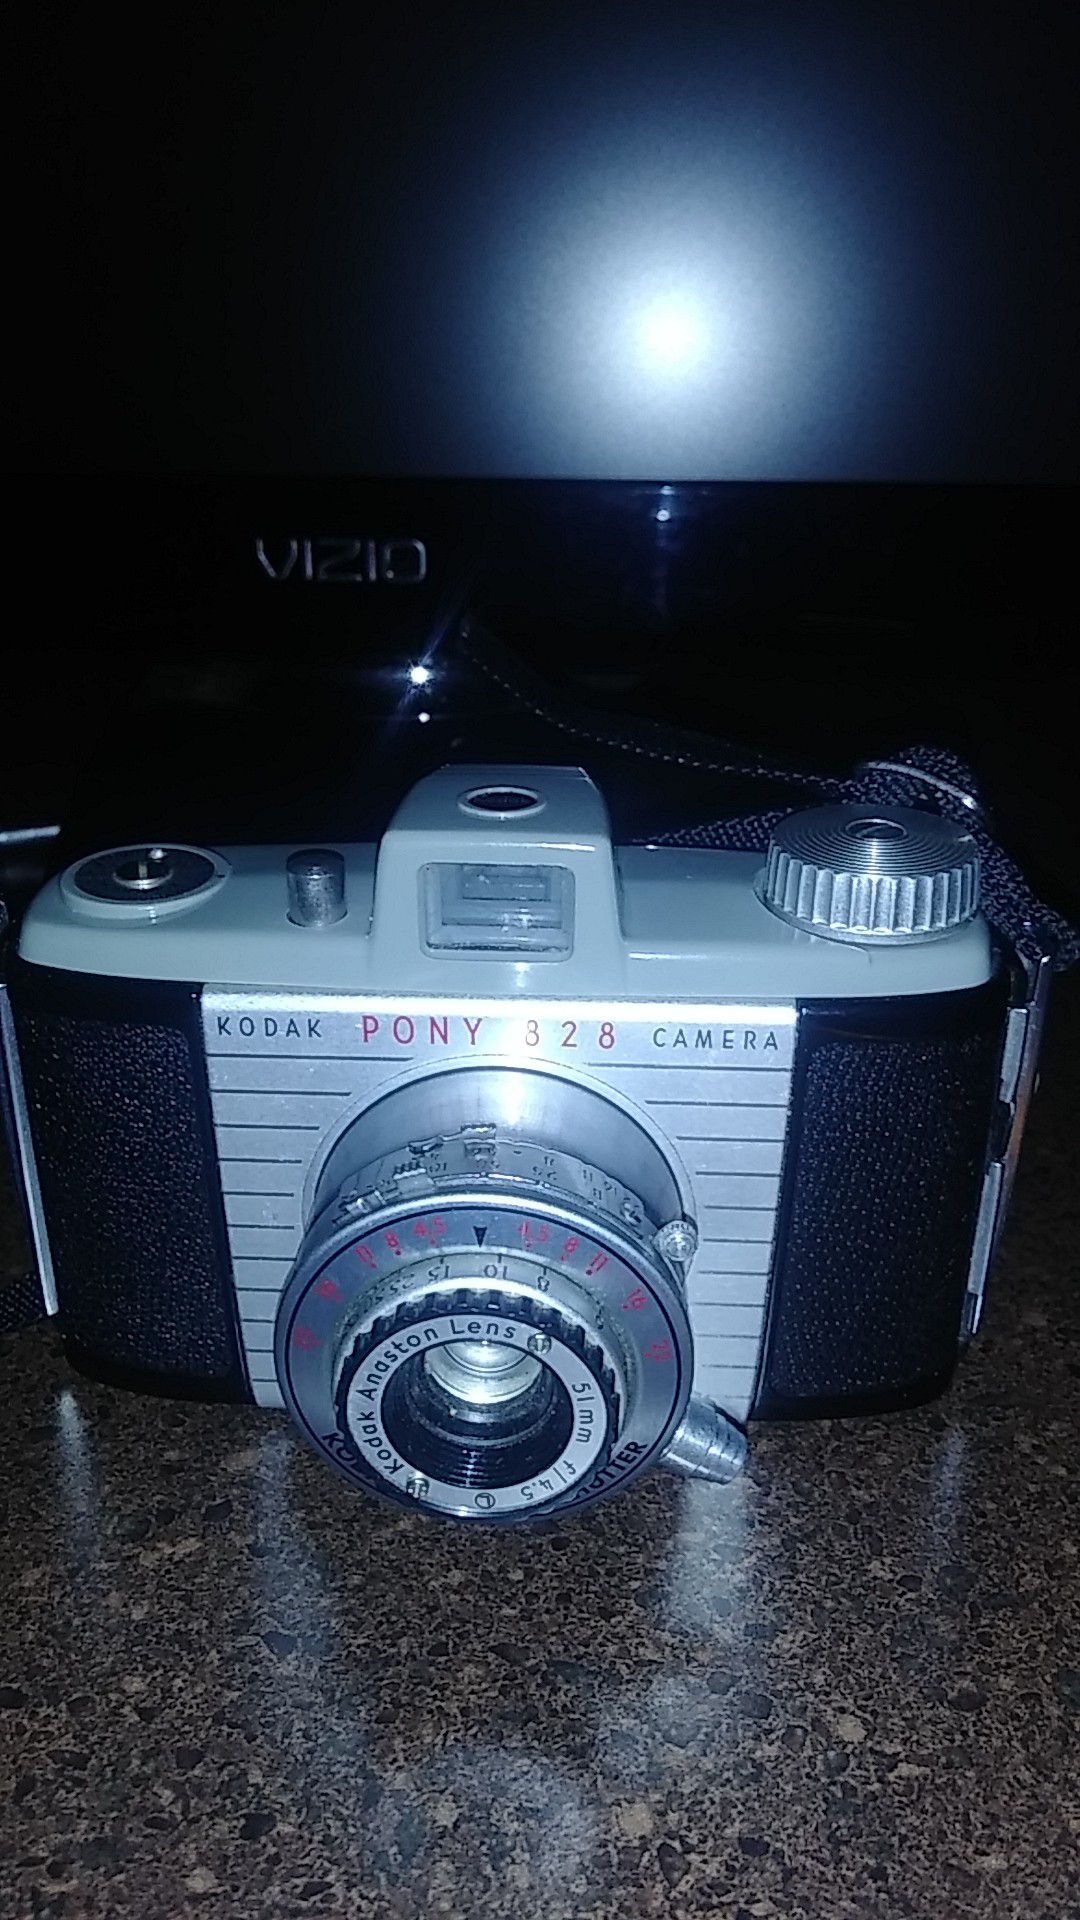 Kodak Pony 828 film camera